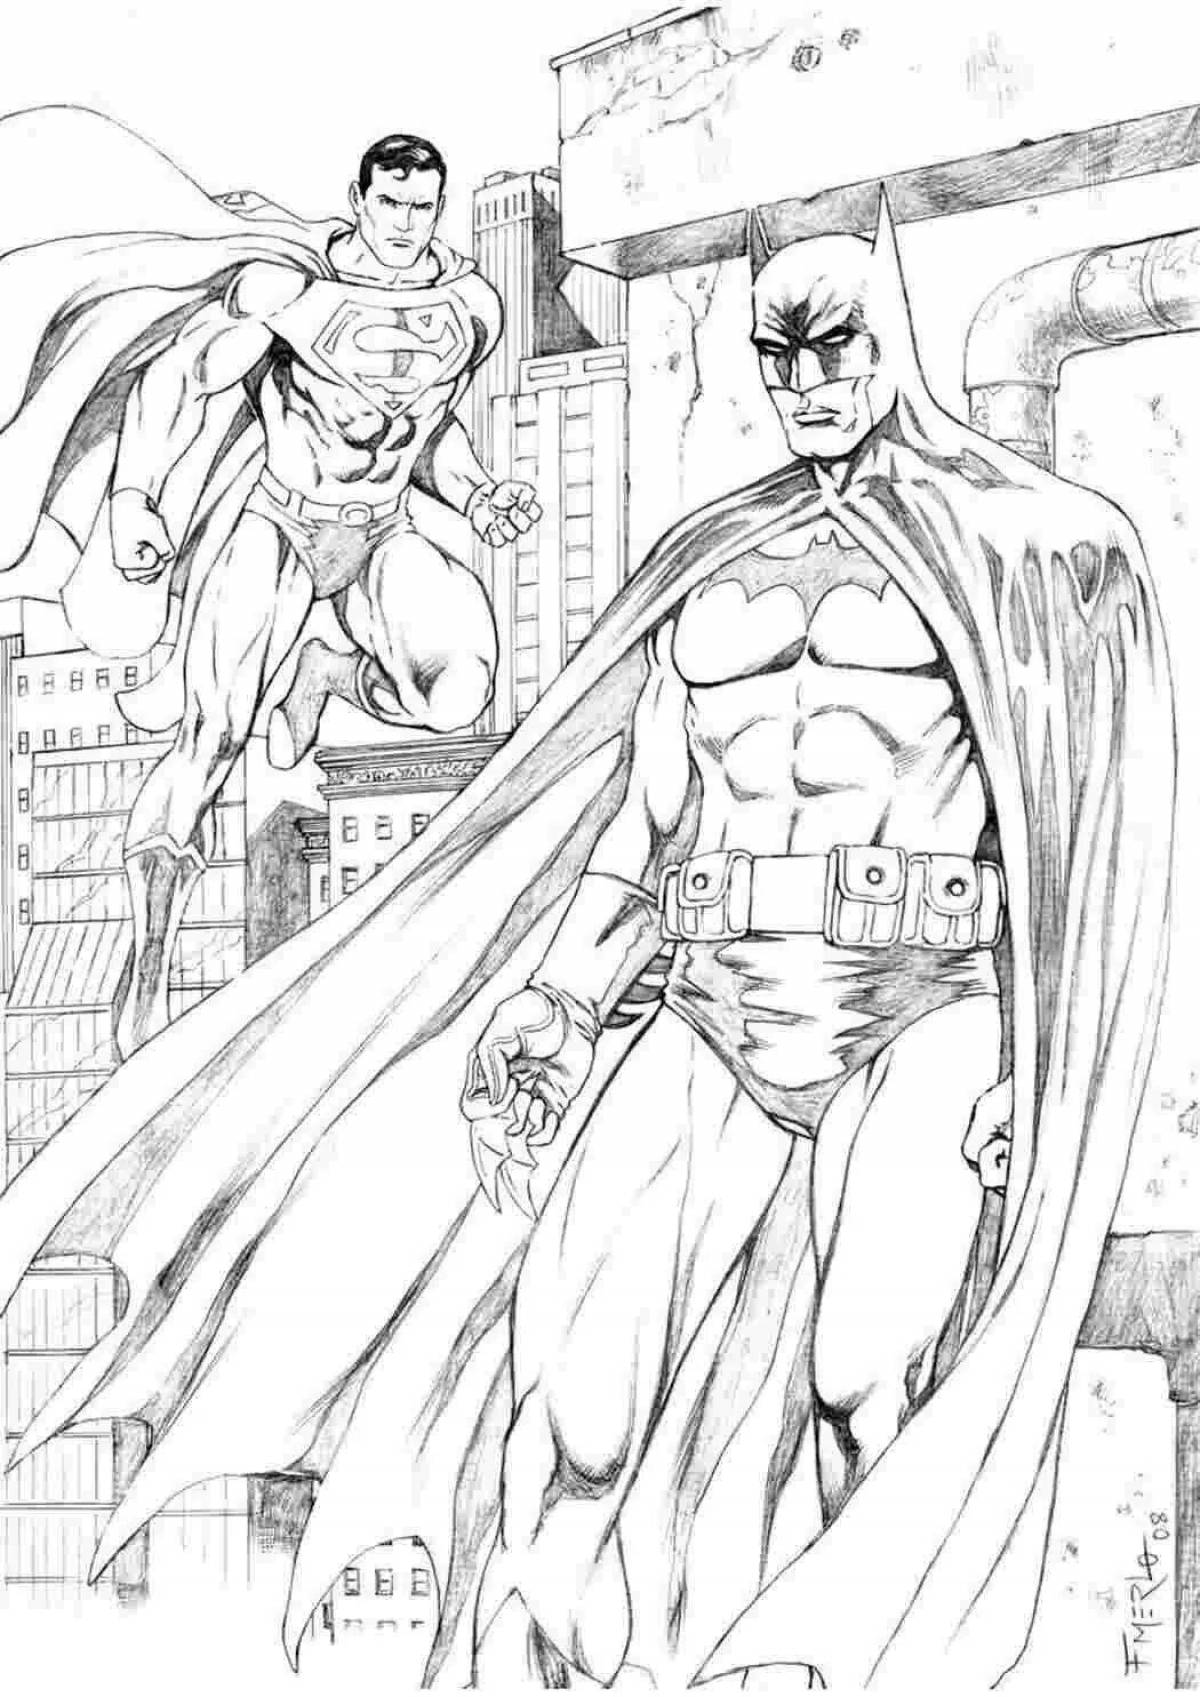 Bright superman and batman coloring book